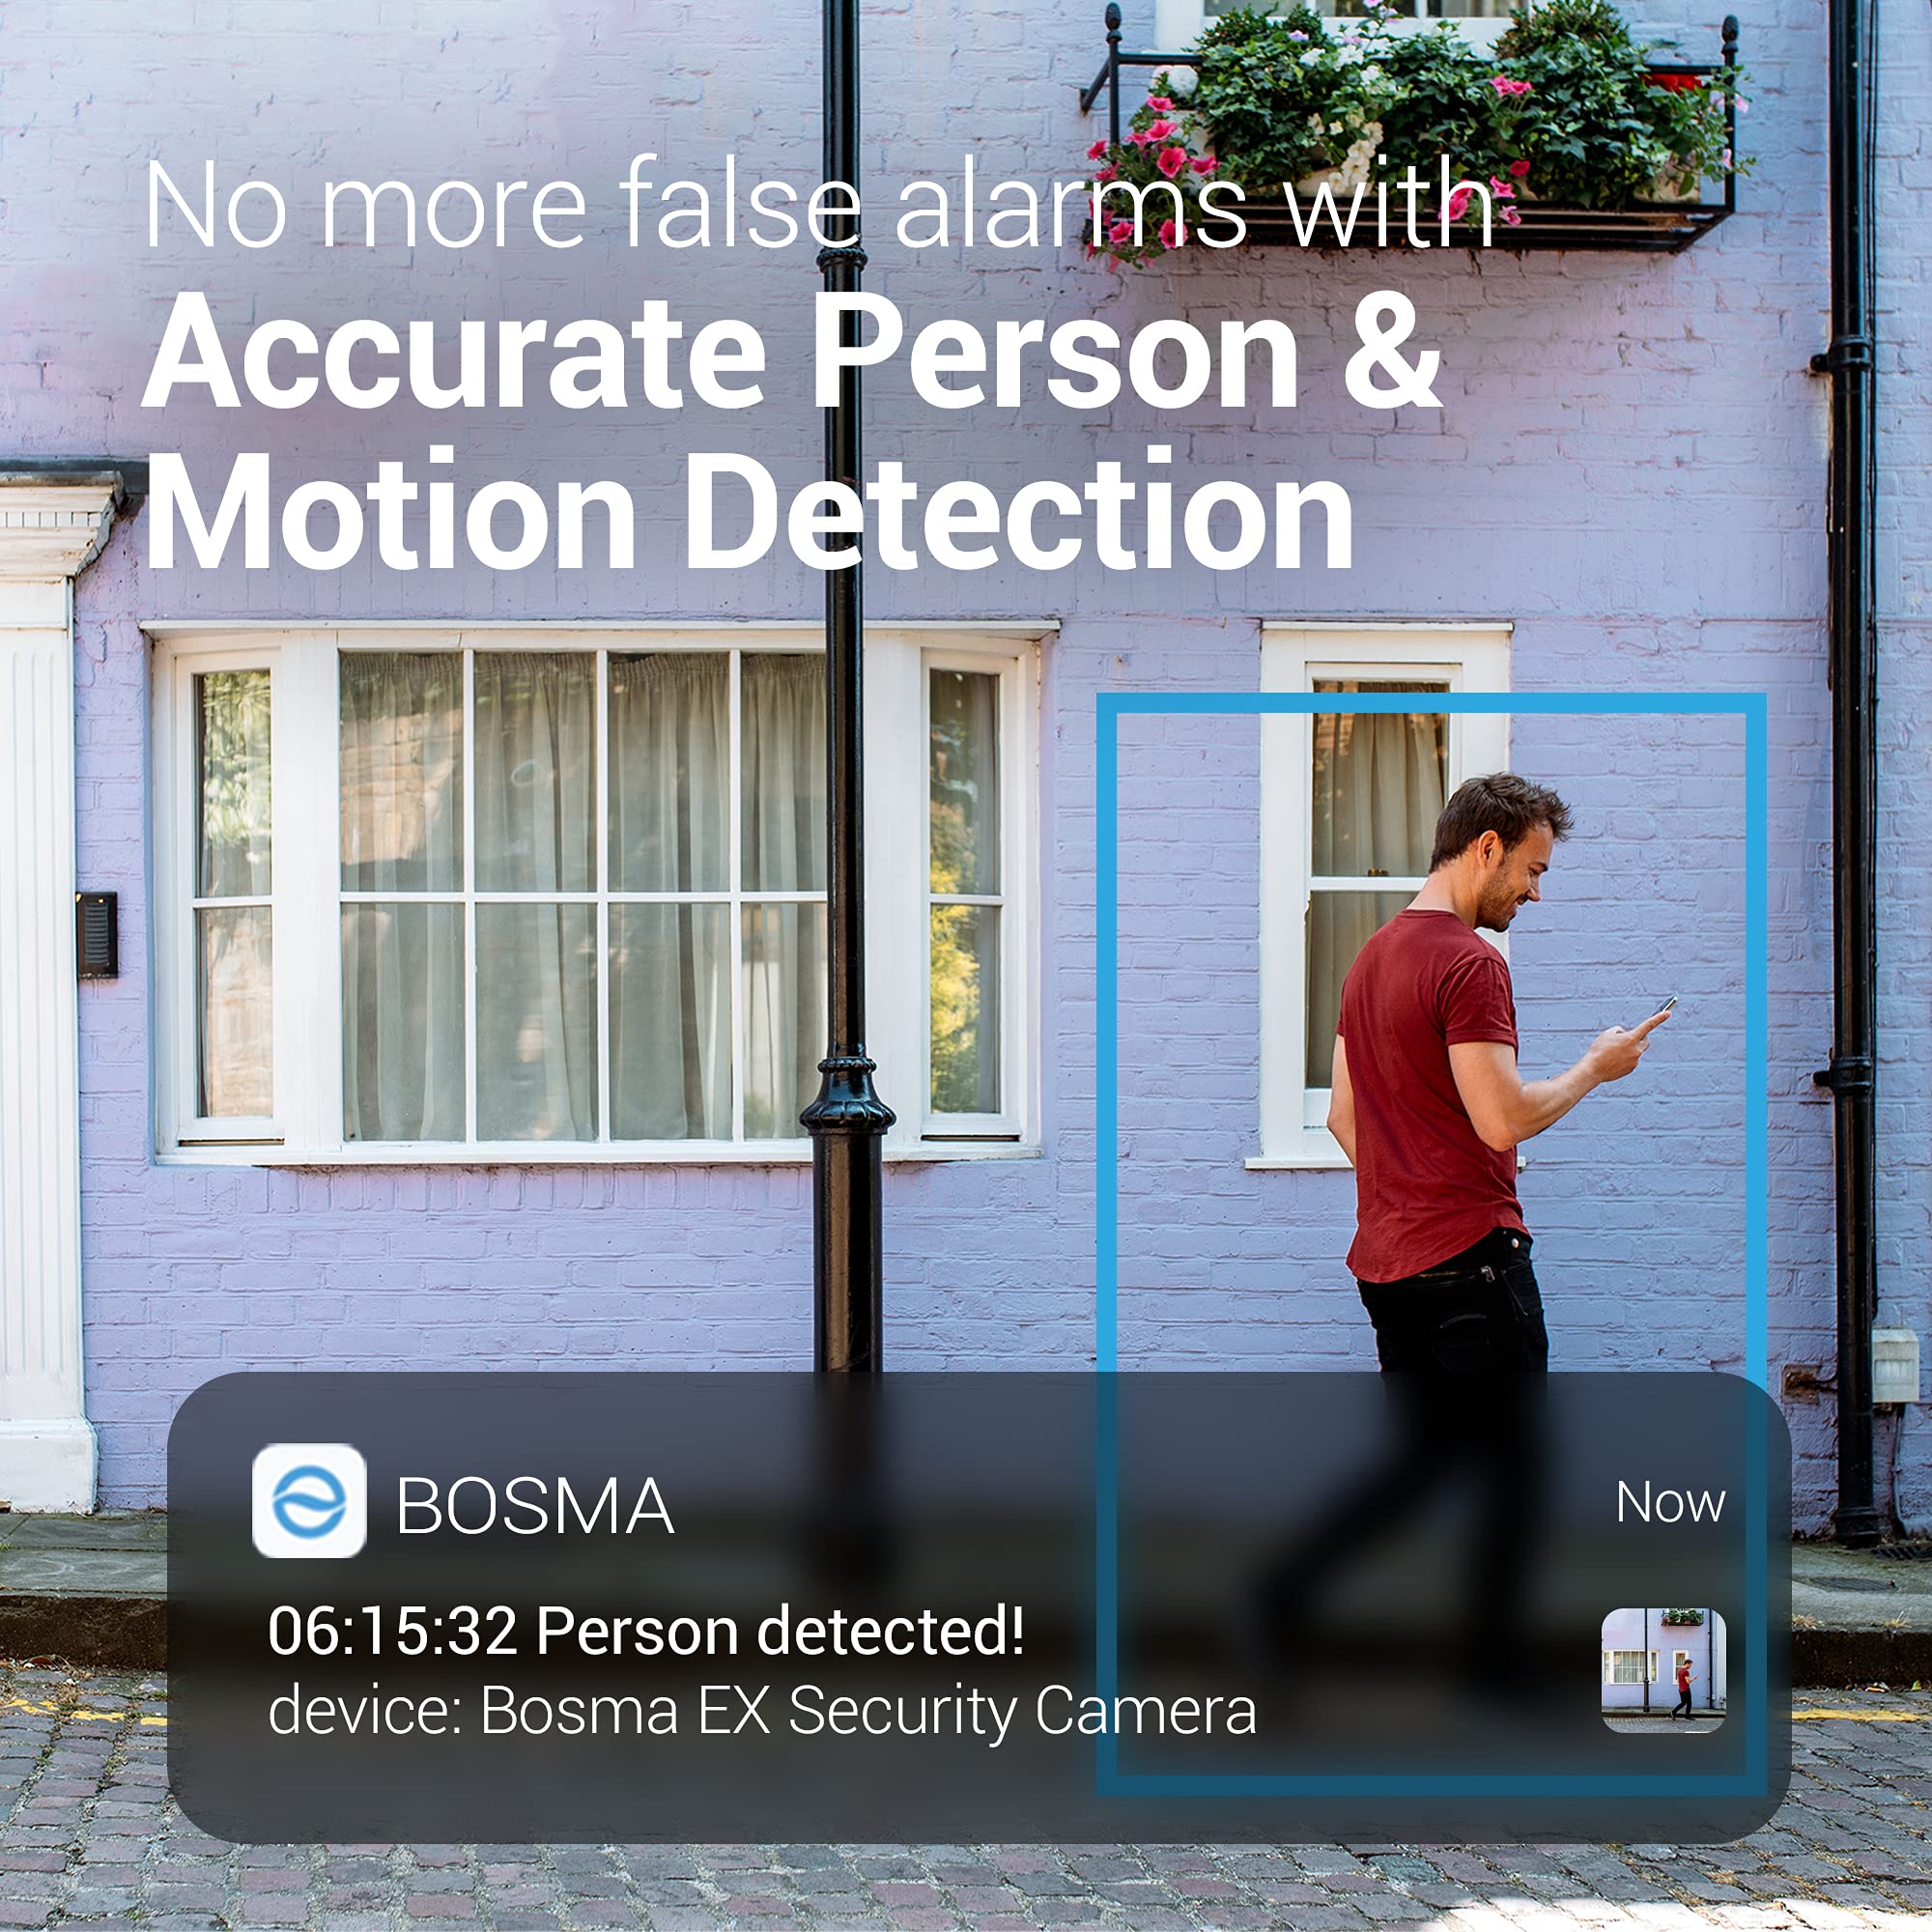 Bosma EX Spotlight HD WiFi Indoor/Outdoor Security Camera, Color Night Vision, Person Detection, Activity Zones, 2-Way Audio, Anti-Theft Alert, Advanced AI Features, Free Cloud Storage